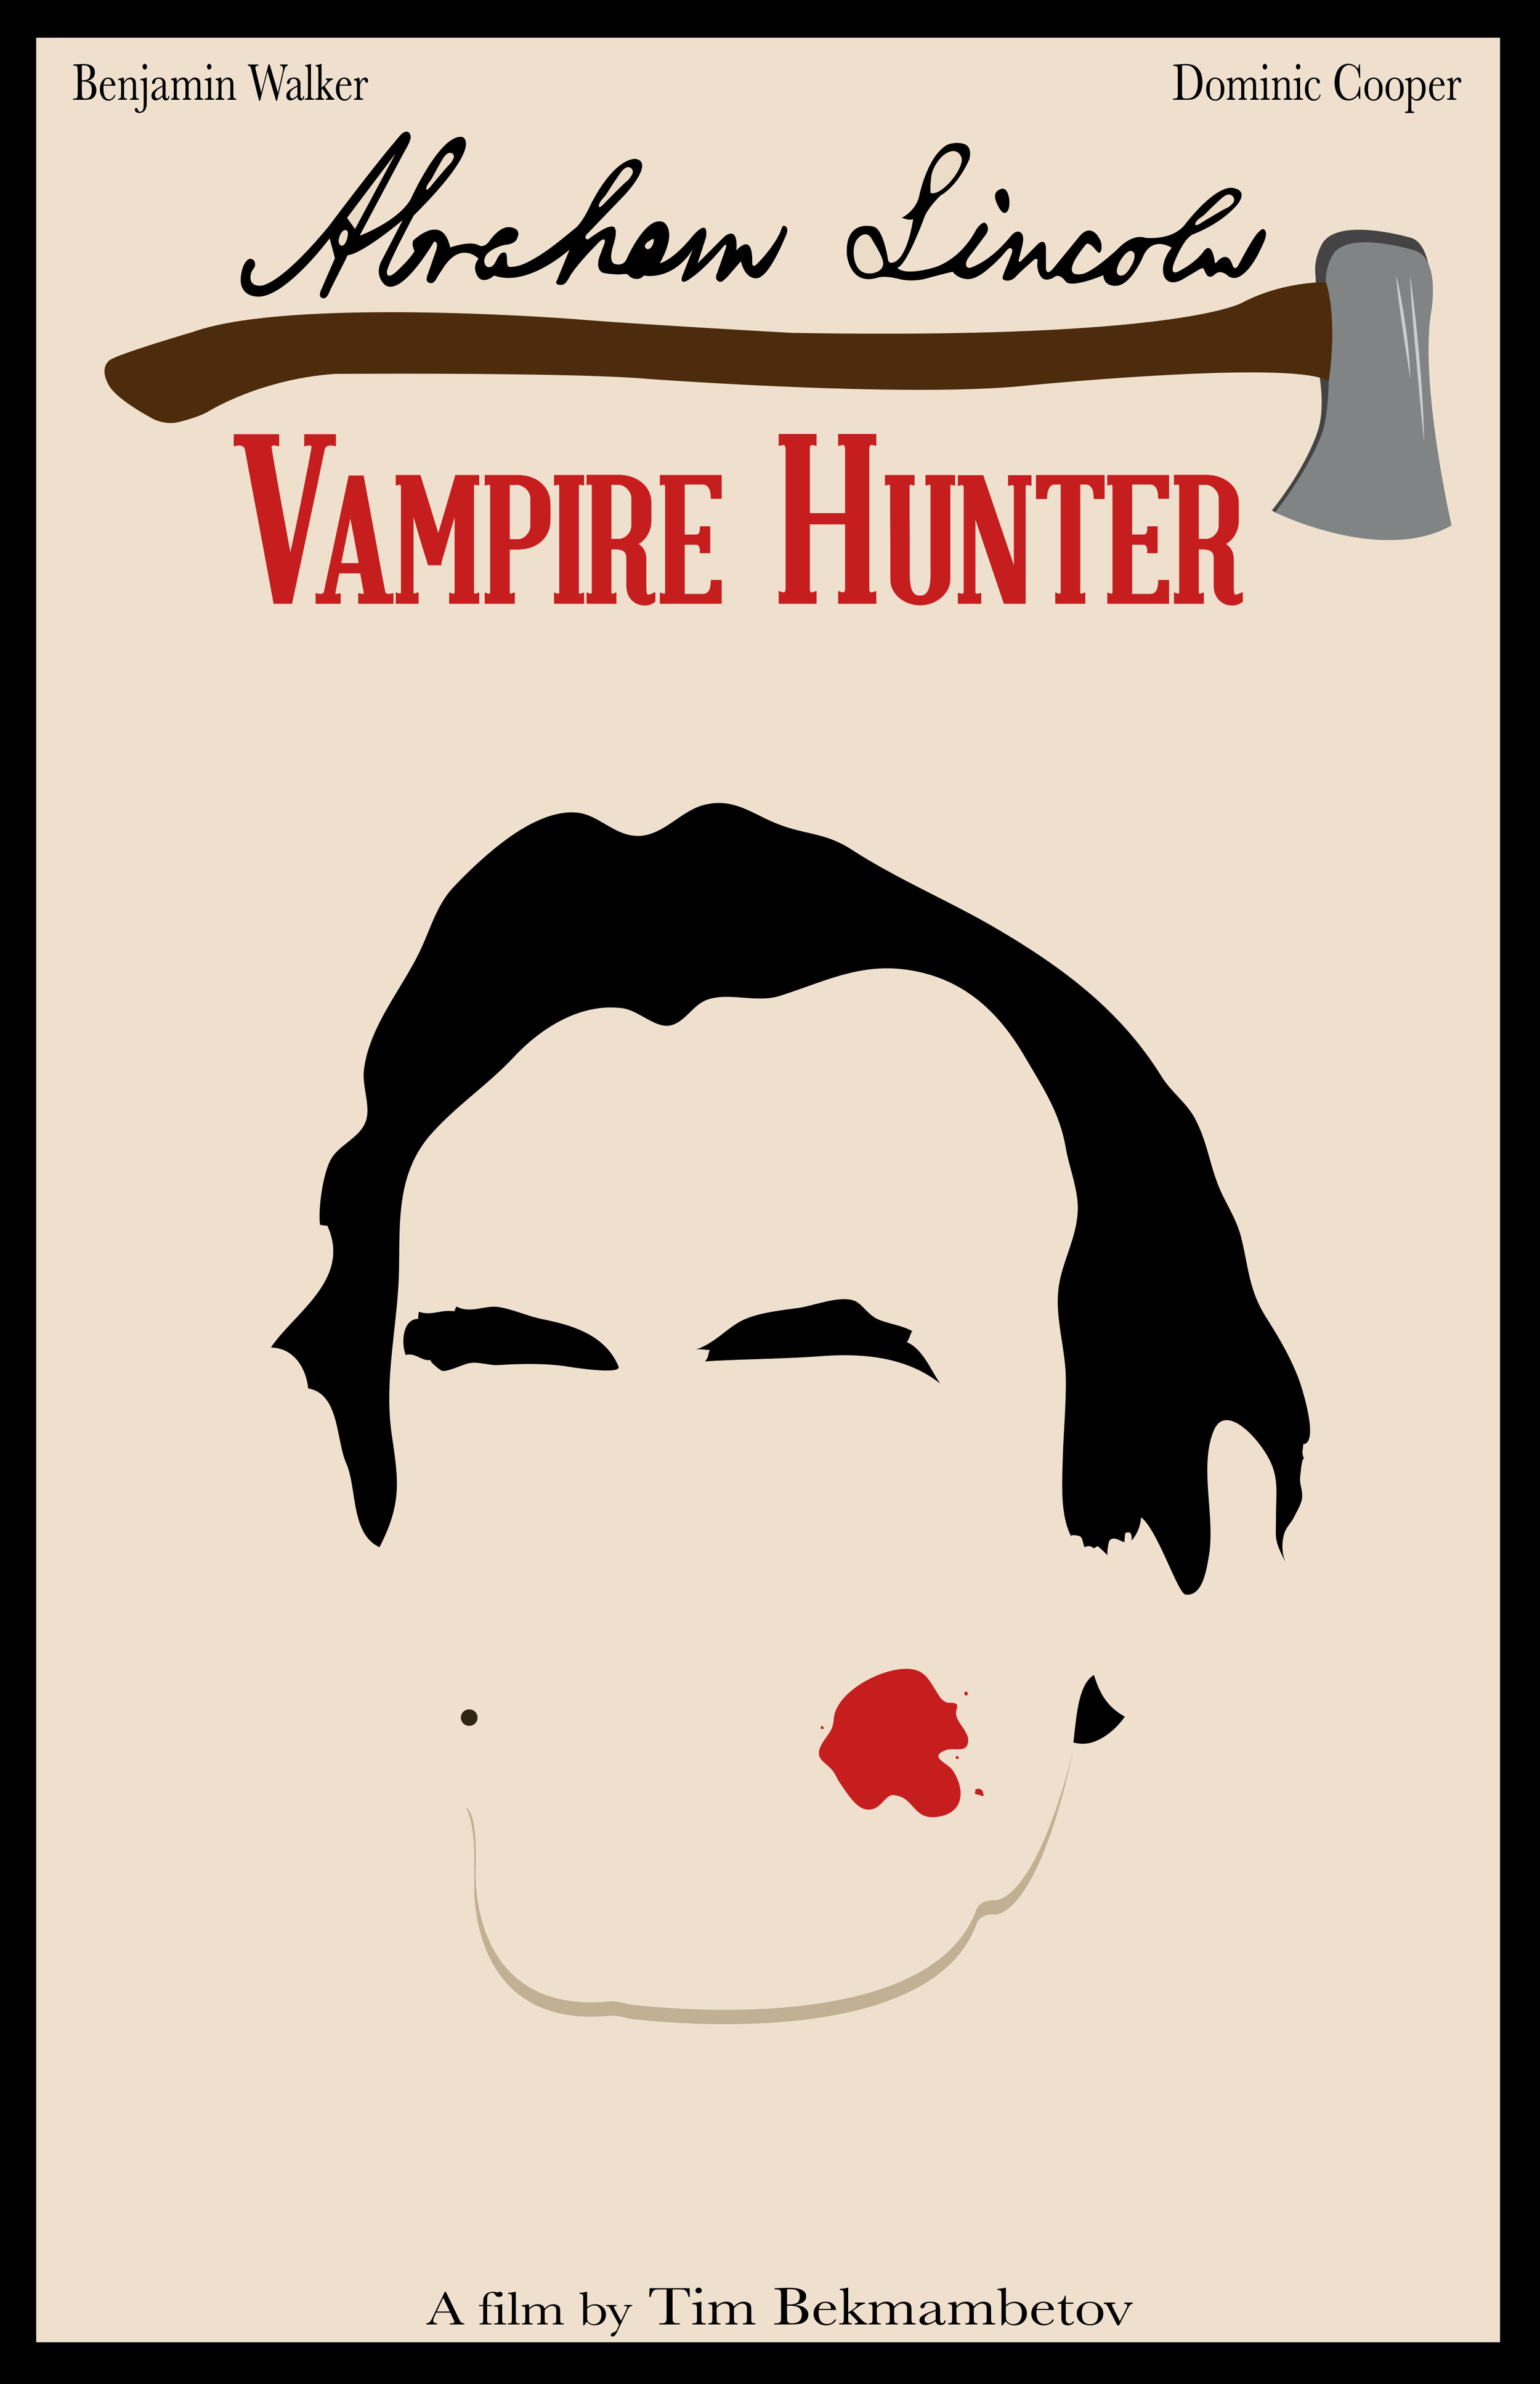 Abraham Lincoln Vampire Hunter (2012)